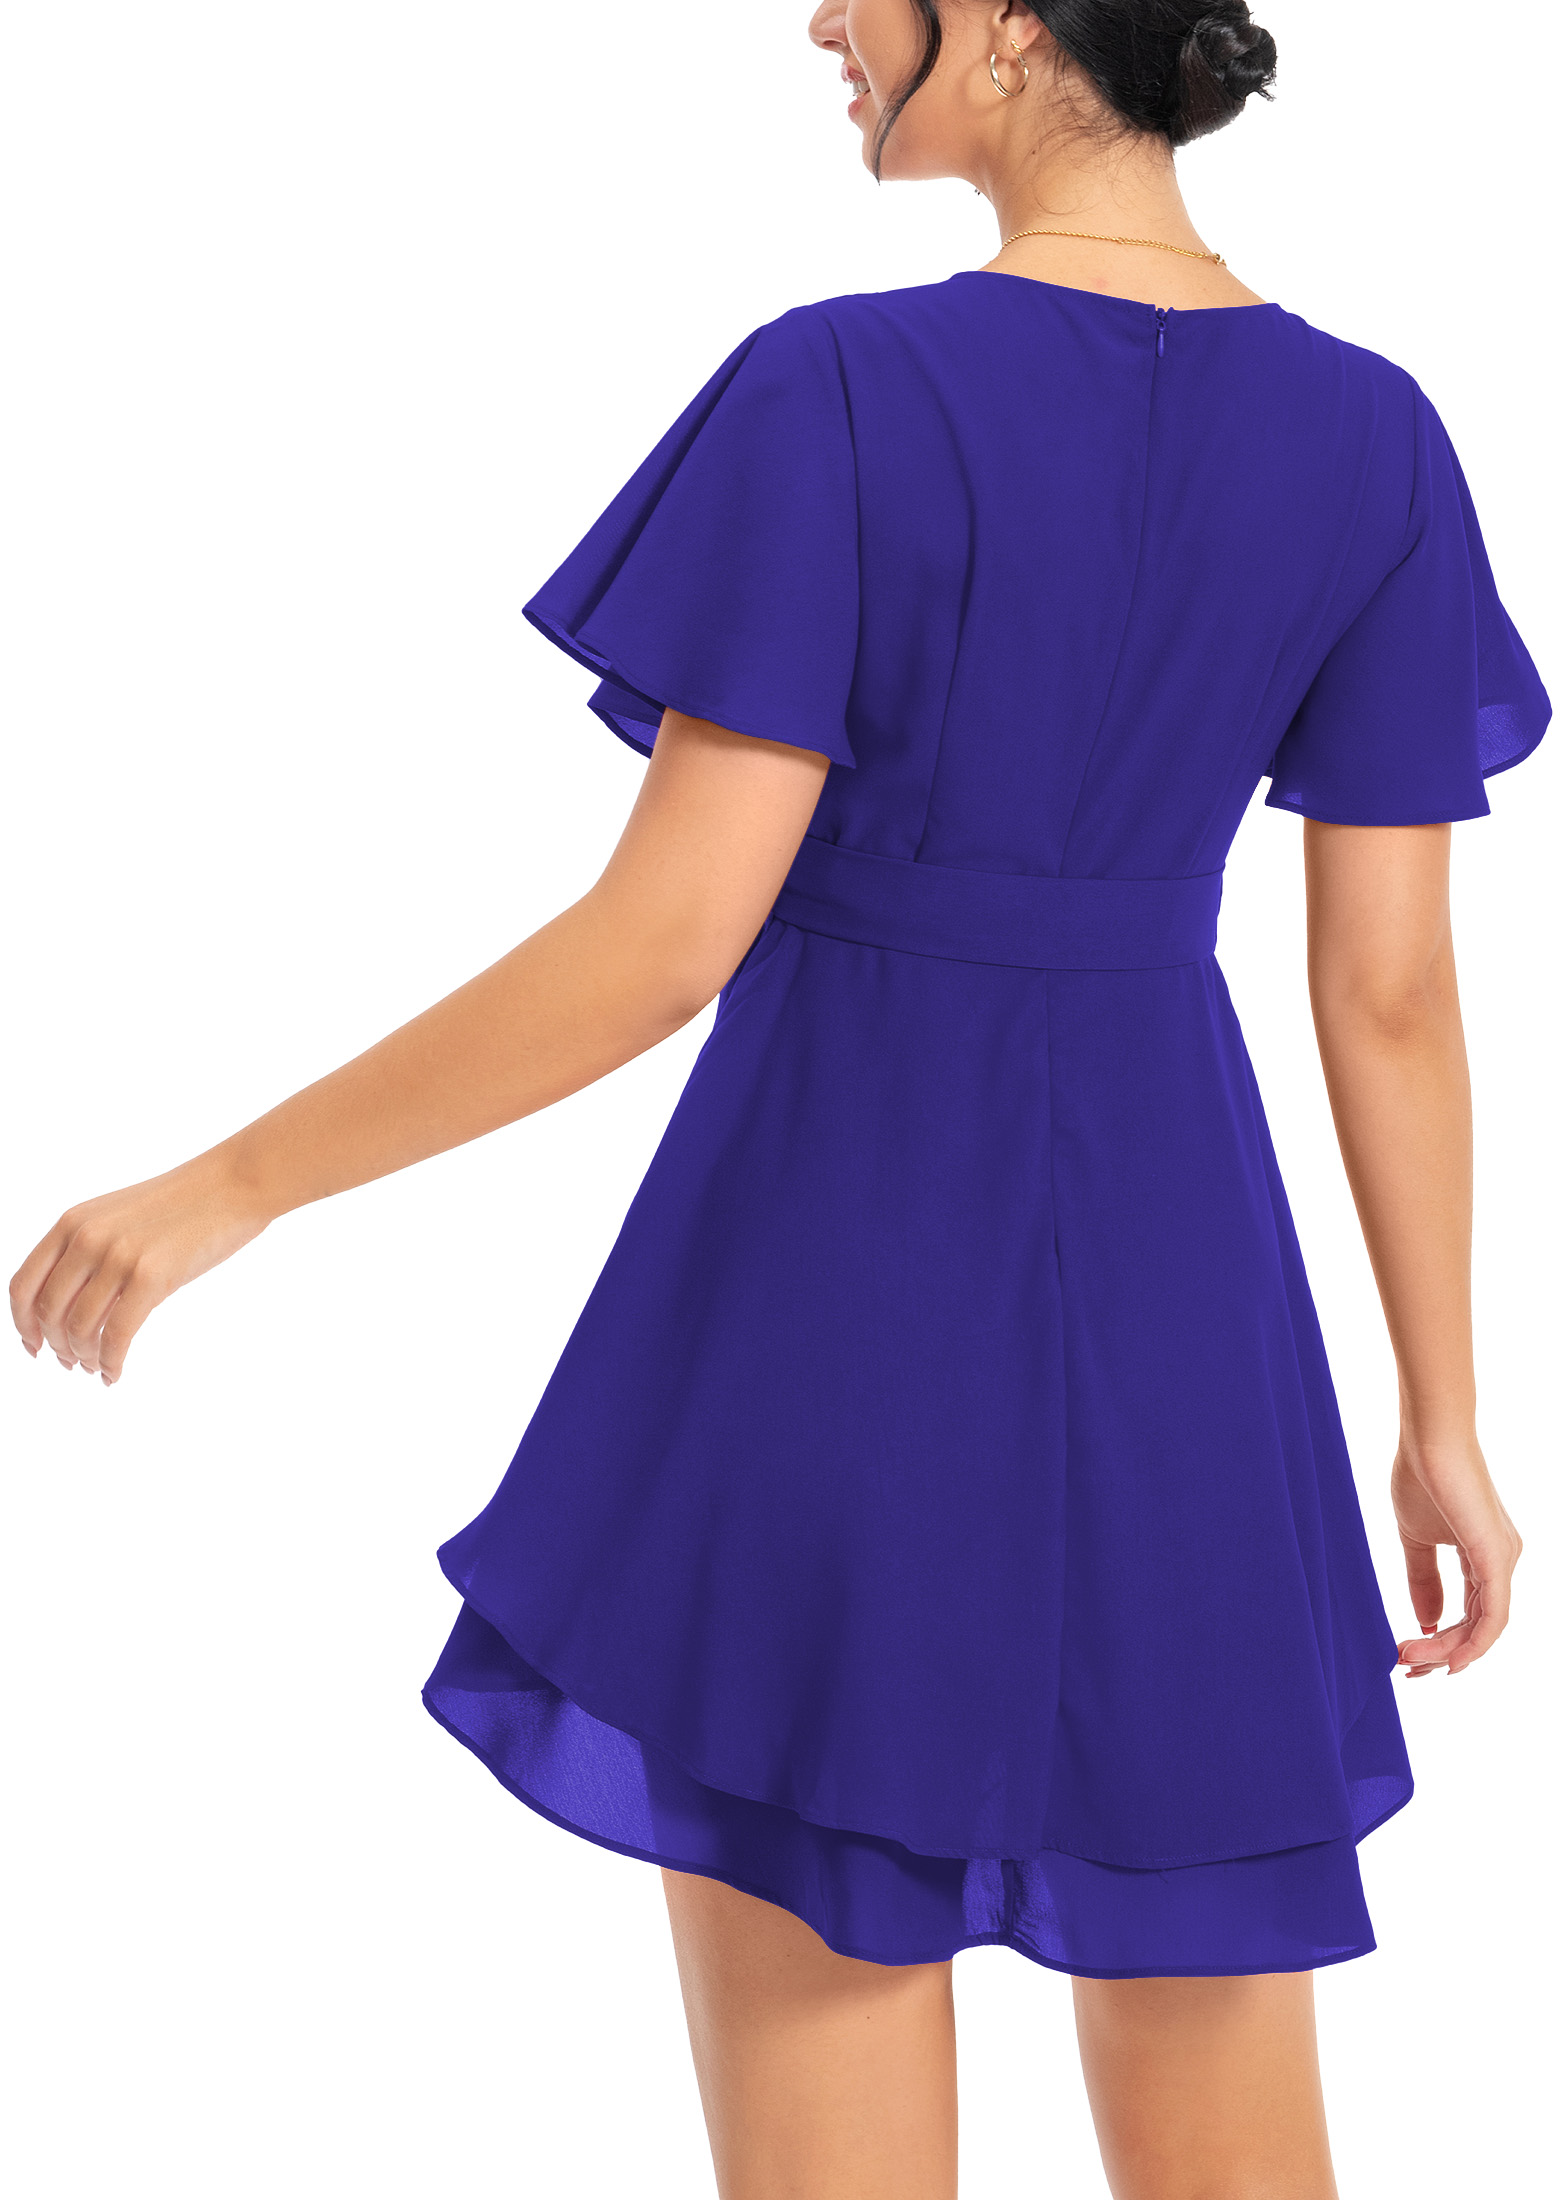  KOJOOIN Women's Summer Deep V Neck Mini Dress Flutter Short  Sleeve High Waist A Line Fit and Flare Skater Dress Blue Paisley L :  Clothing, Shoes & Jewelry